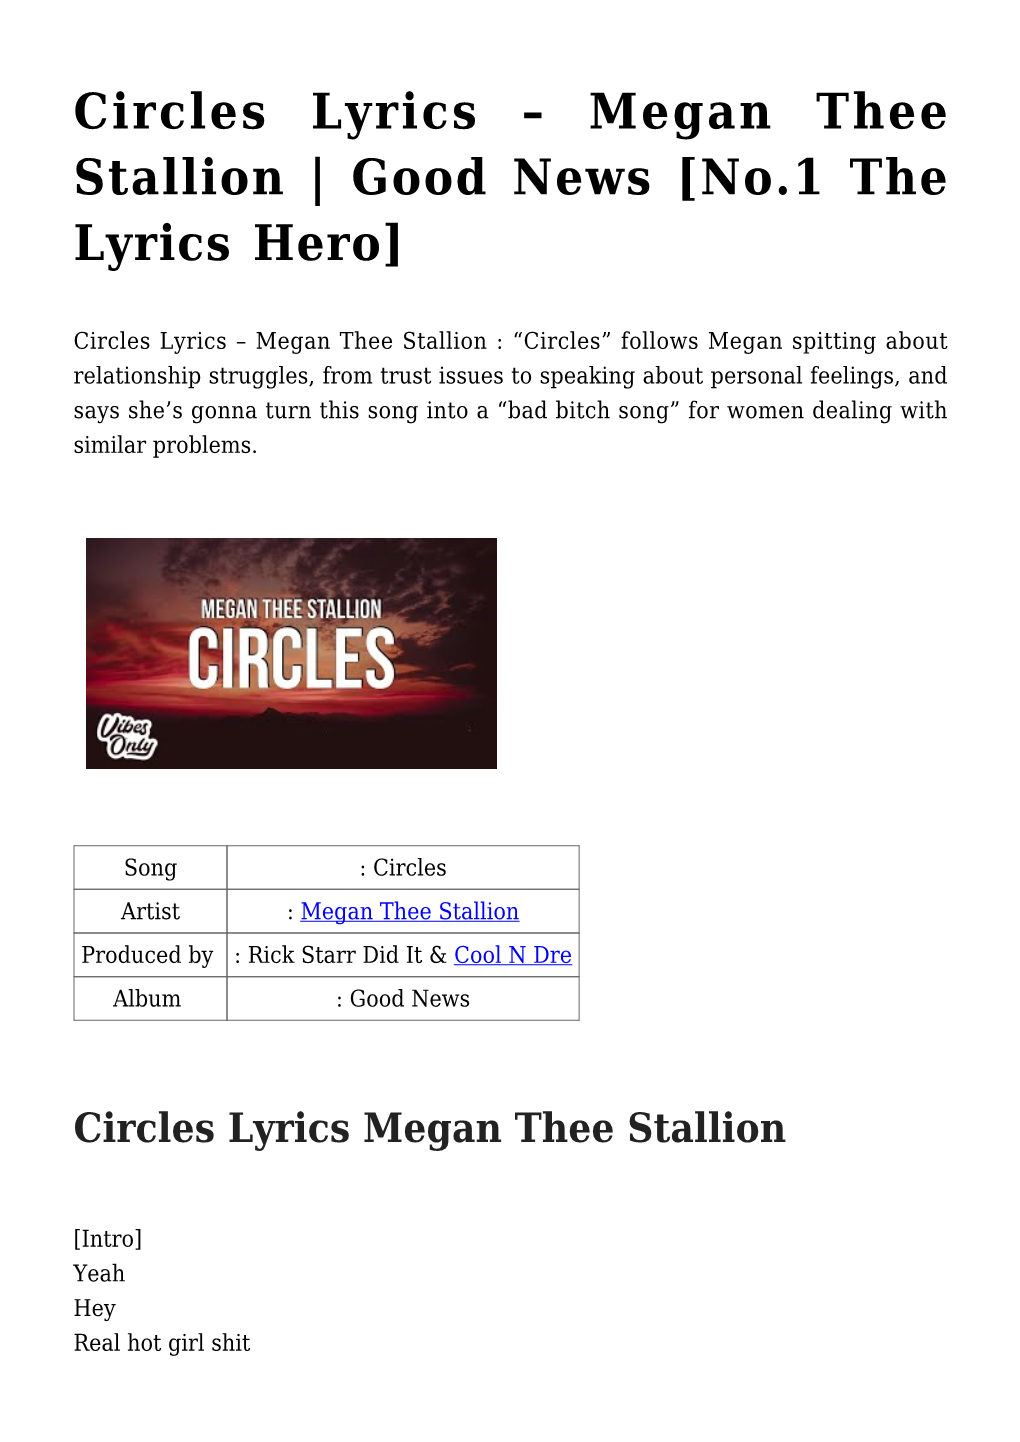 Megan Thee Stallion | Good News [No.1 the Lyrics Hero]